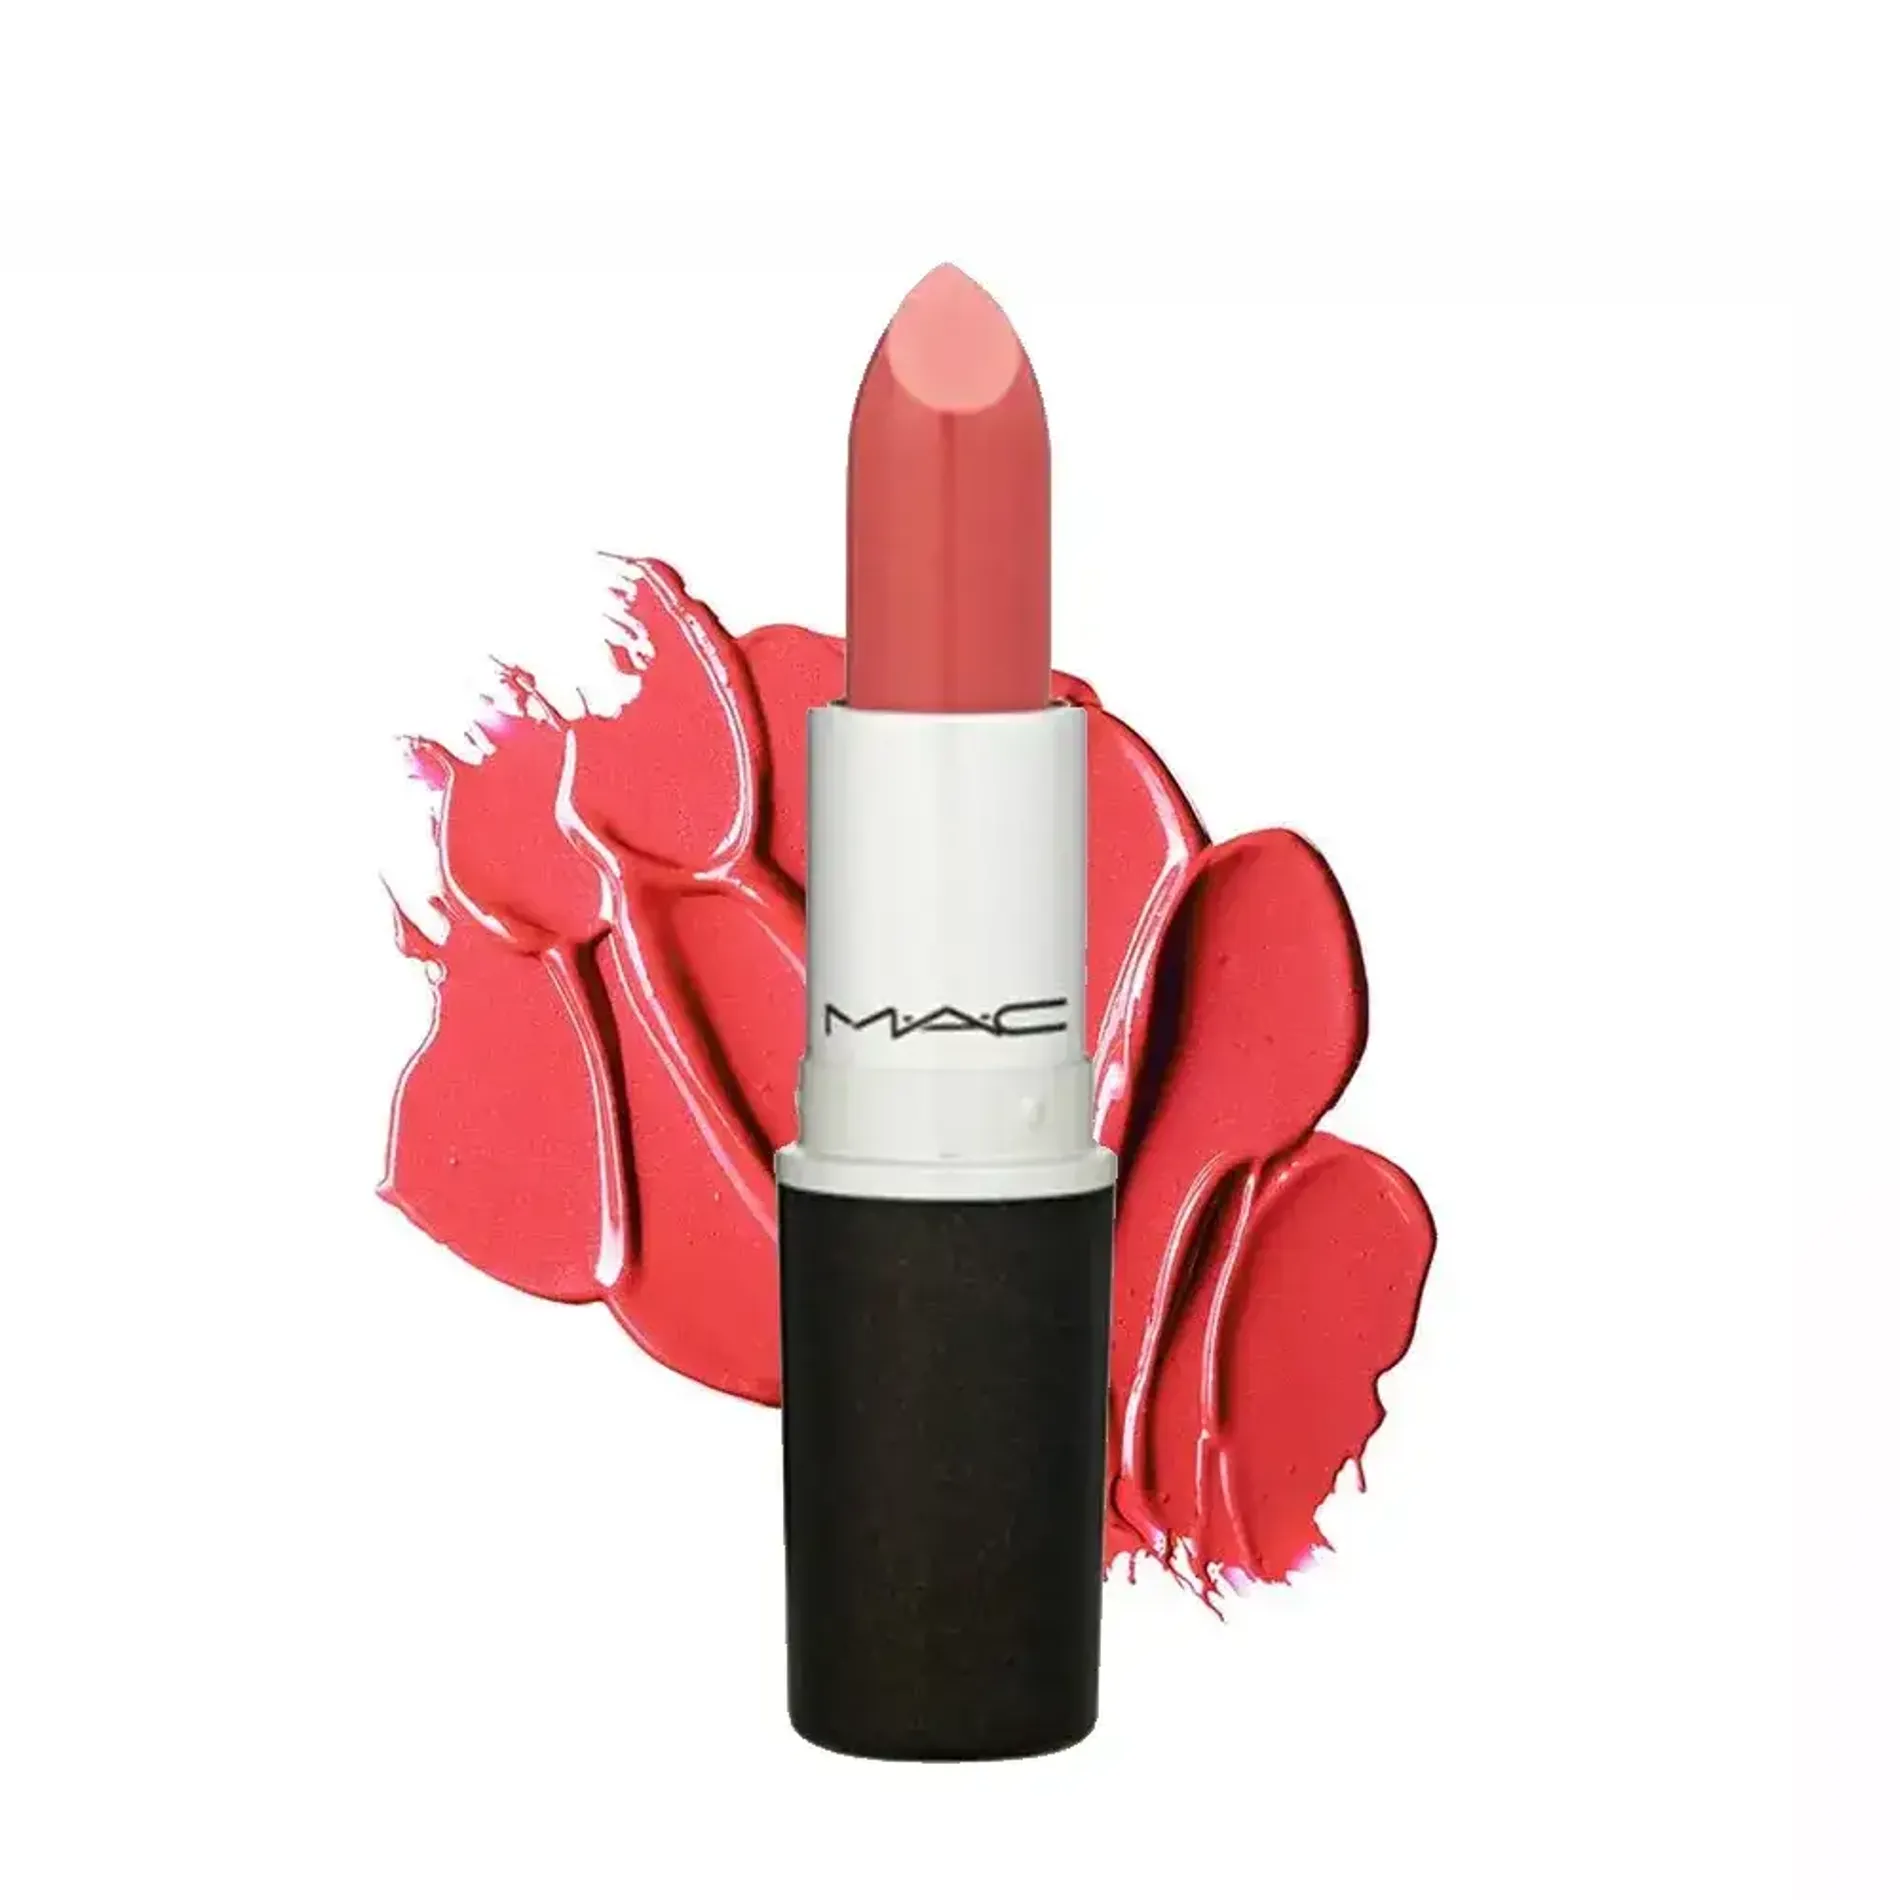 son-thoi-li-mac-cremesheen-lipstick-3g-7